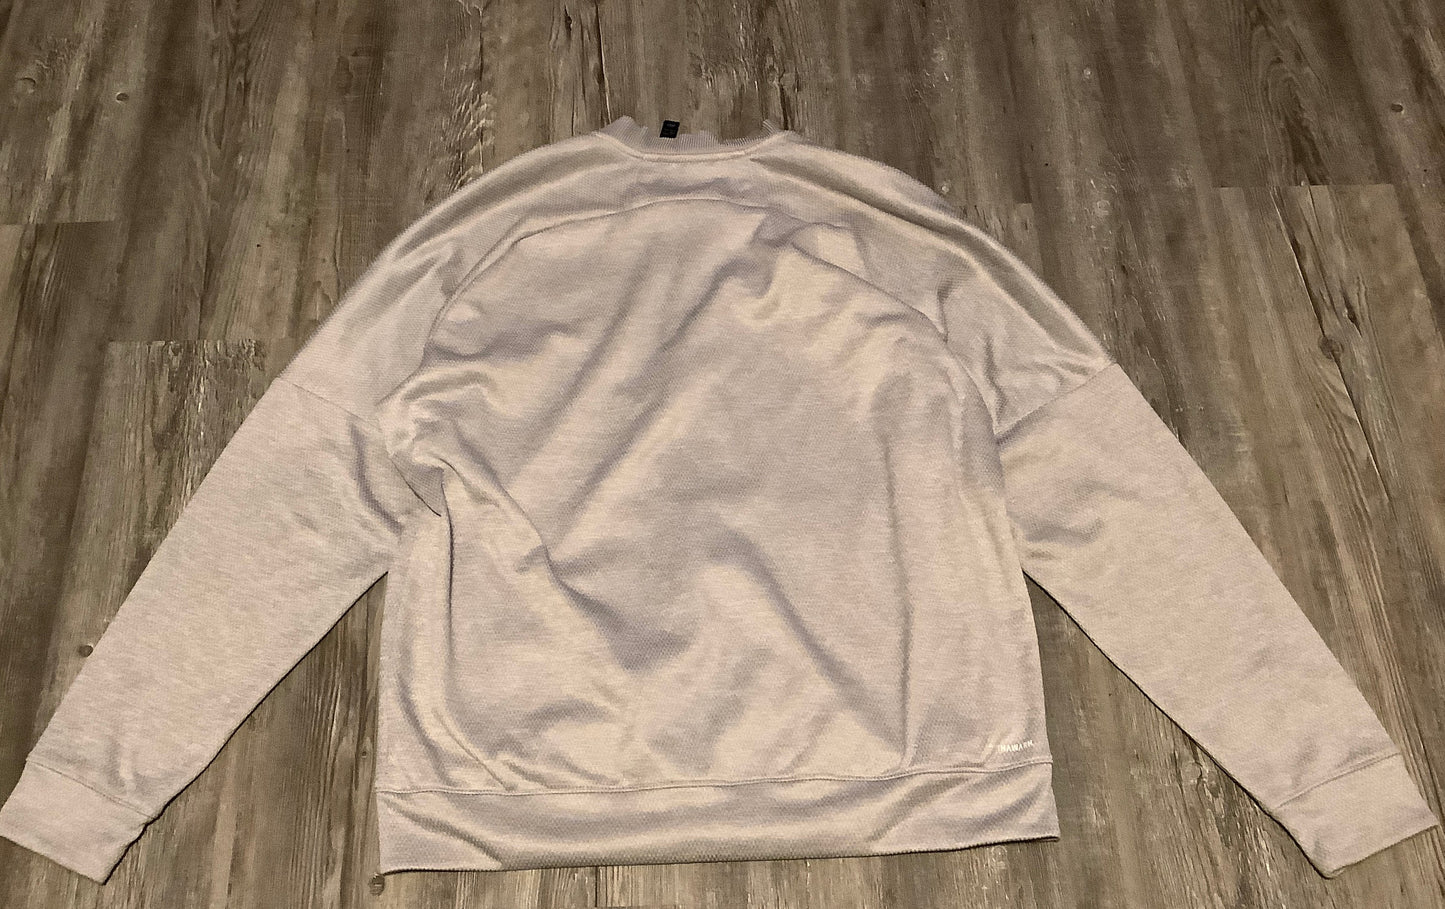 Sweater By Adidas  Size: Xl